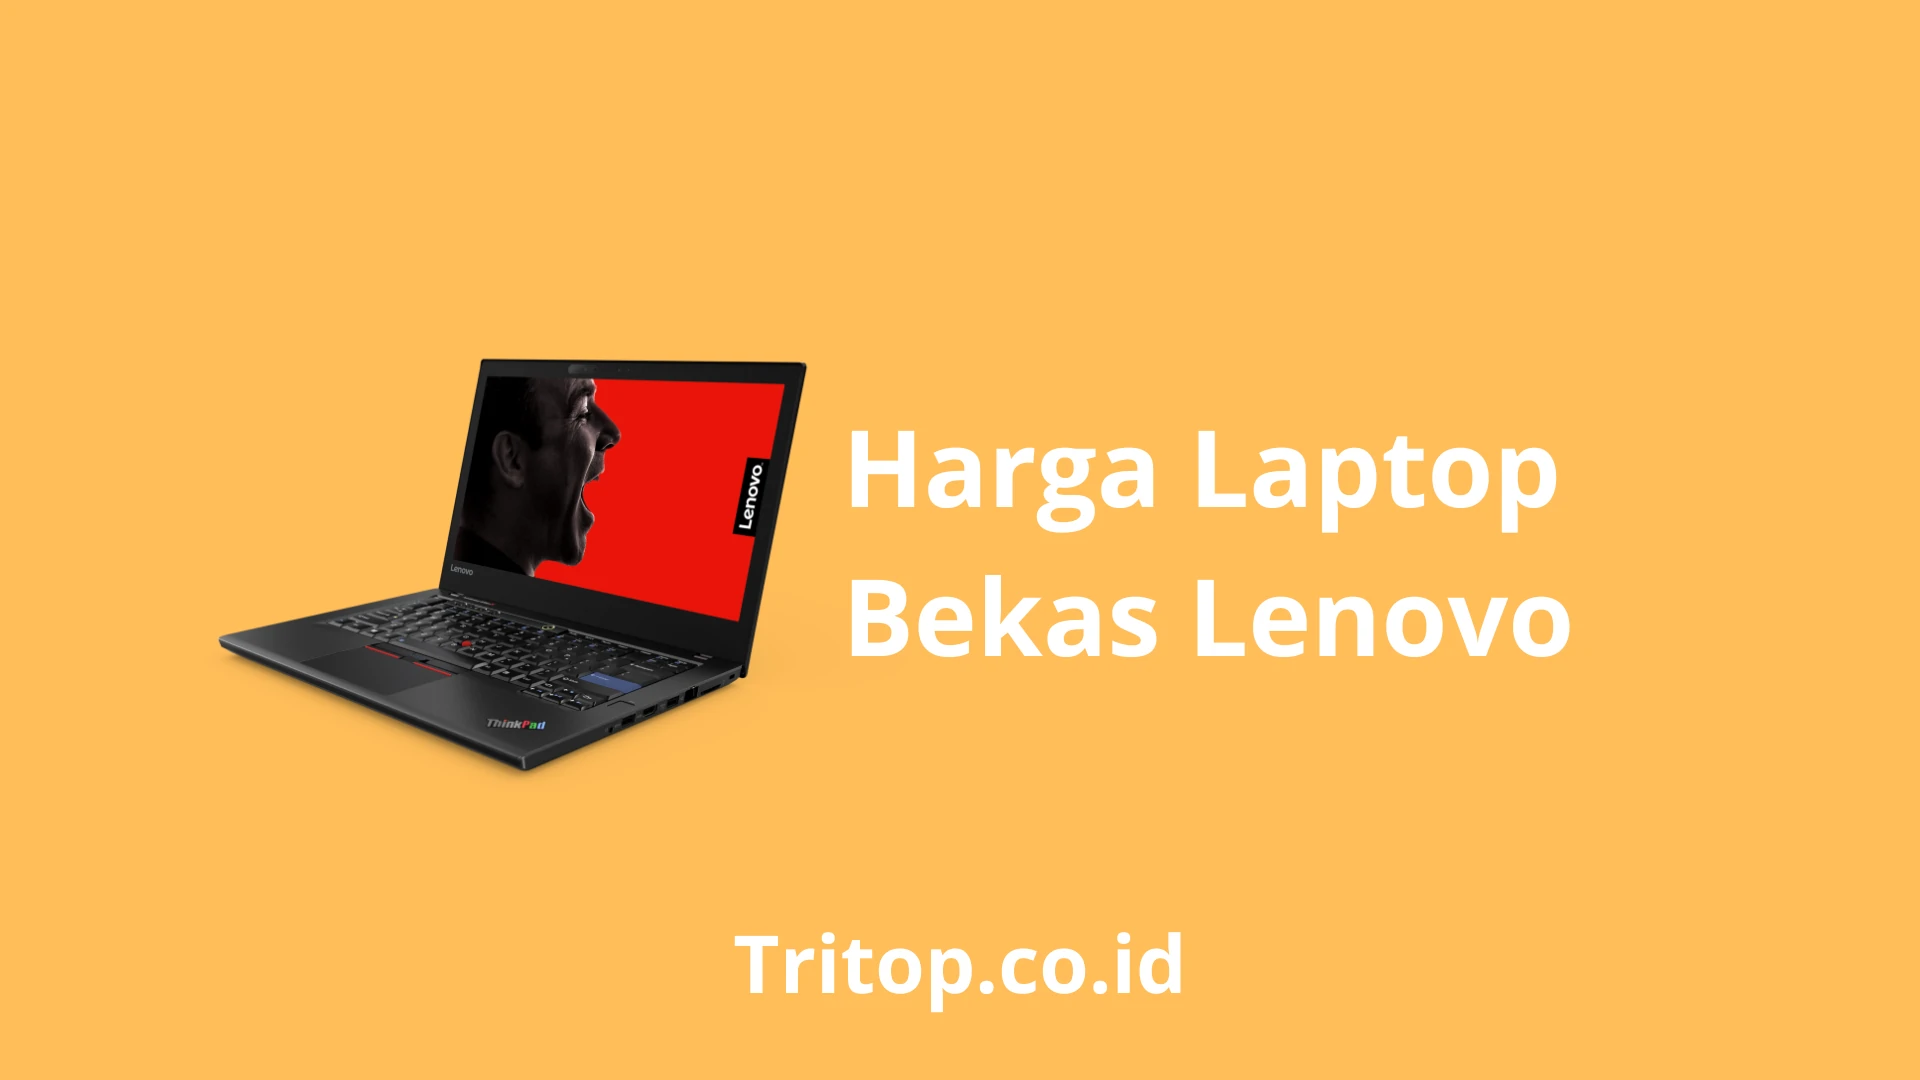 Harga Laptop Bekas Lenovo Tritop.co.id